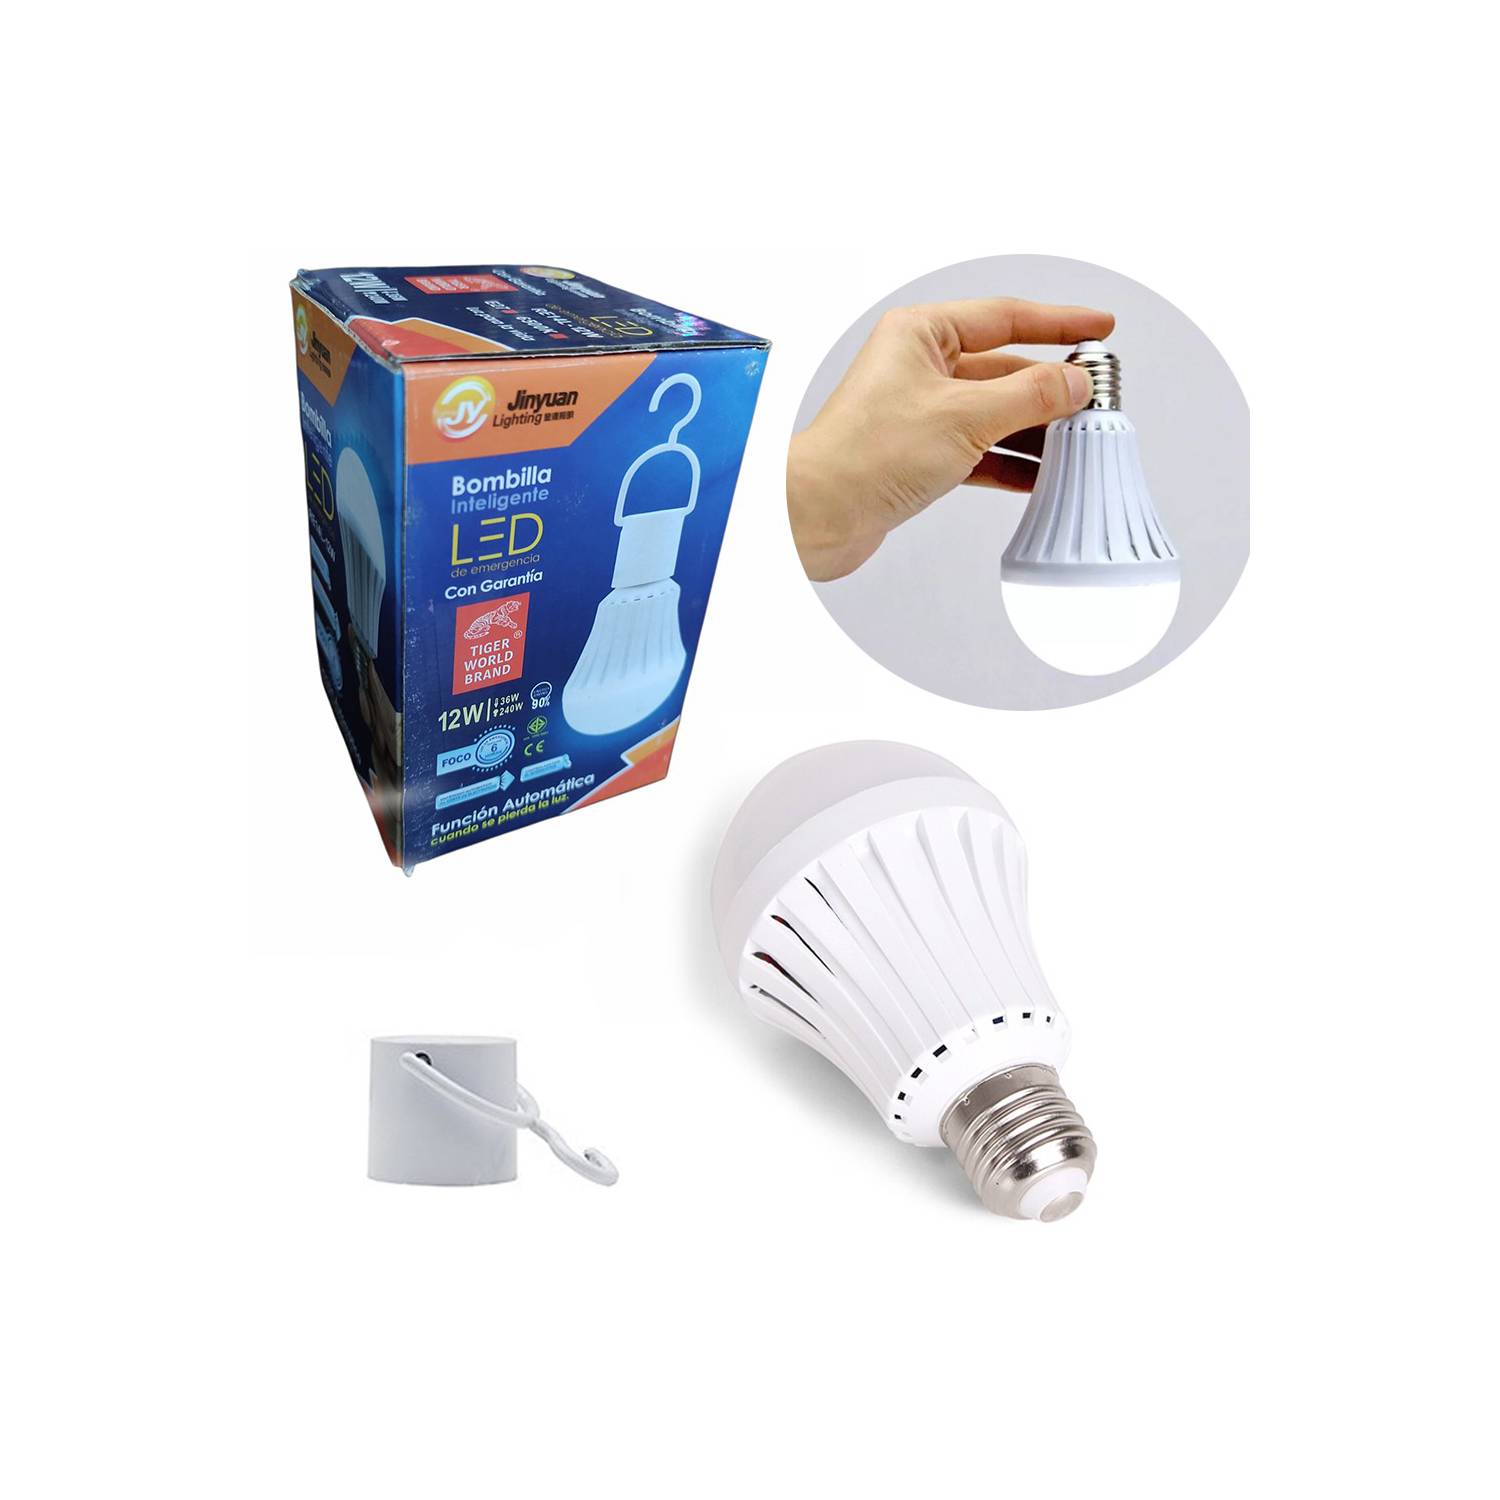 Bombilla de luz LED recargable de emergencia para la iluminación del hogar  - China Batería recargable Lámpara LED, Luz de emergencia emergencia